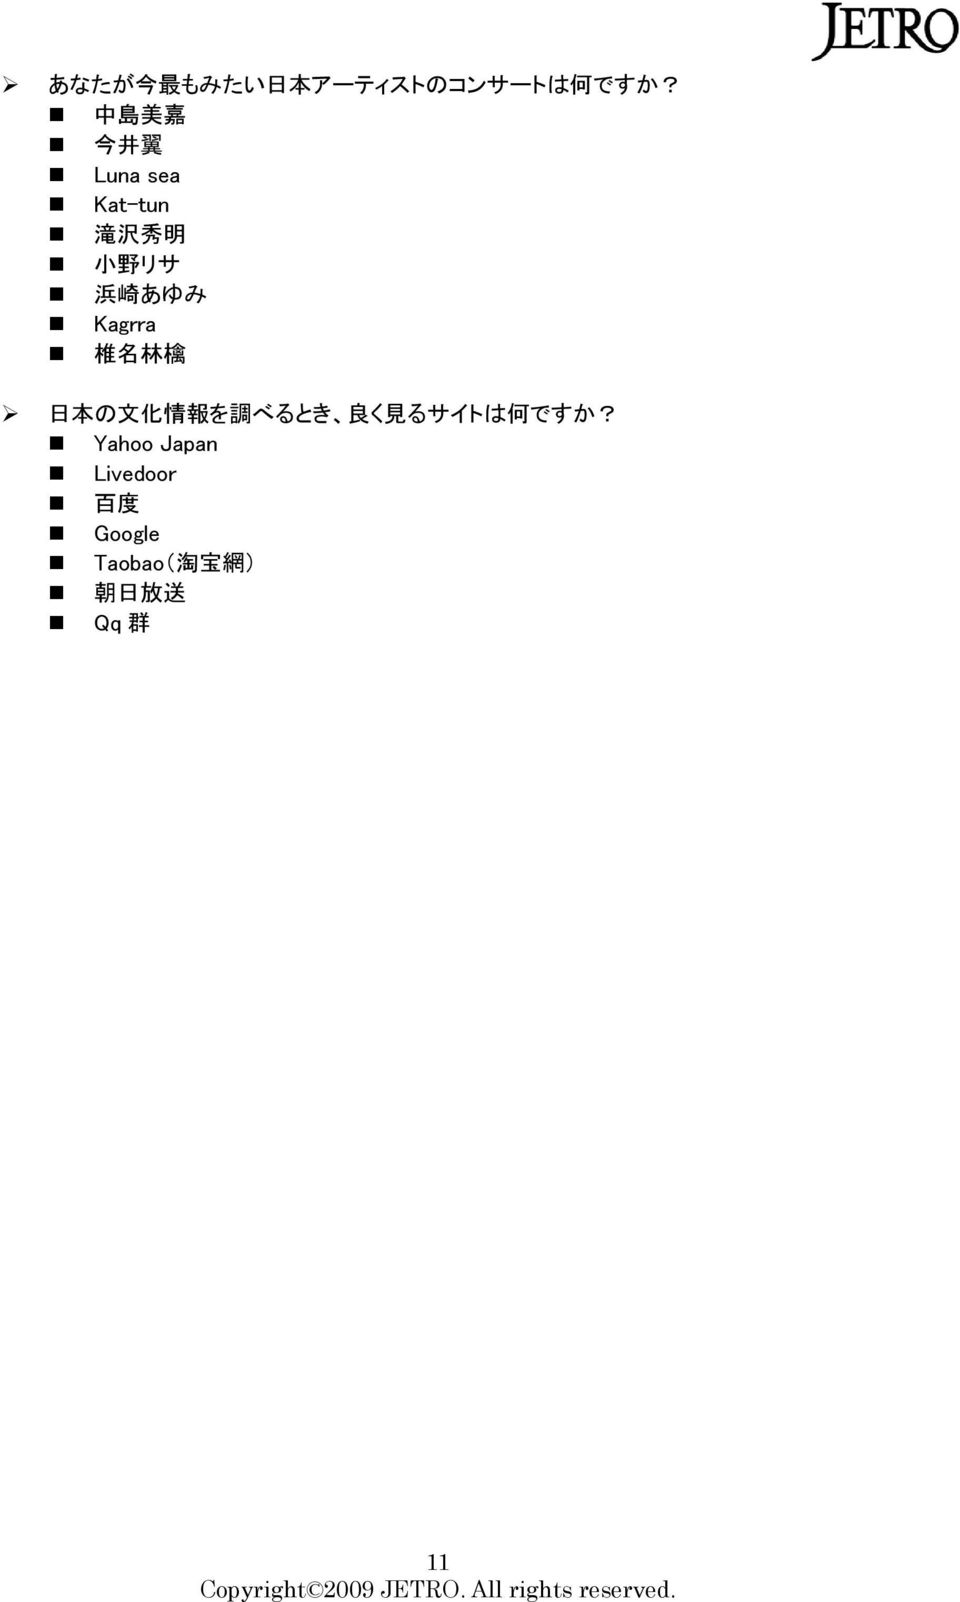 Kagrra 椎 名 林 檎 日 本 の 文 化 情 報 を 調 べるとき 良 く 見 るサイトは 何